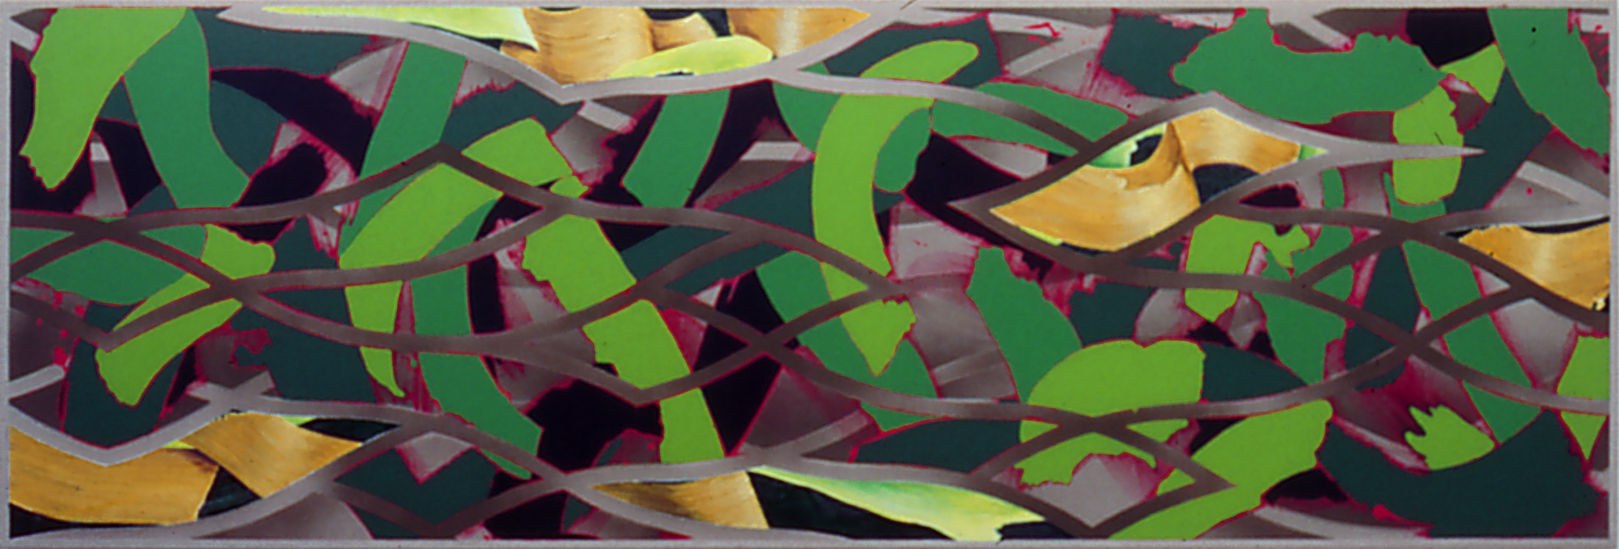 untitled, acryl on linen, 100 x 300 cm